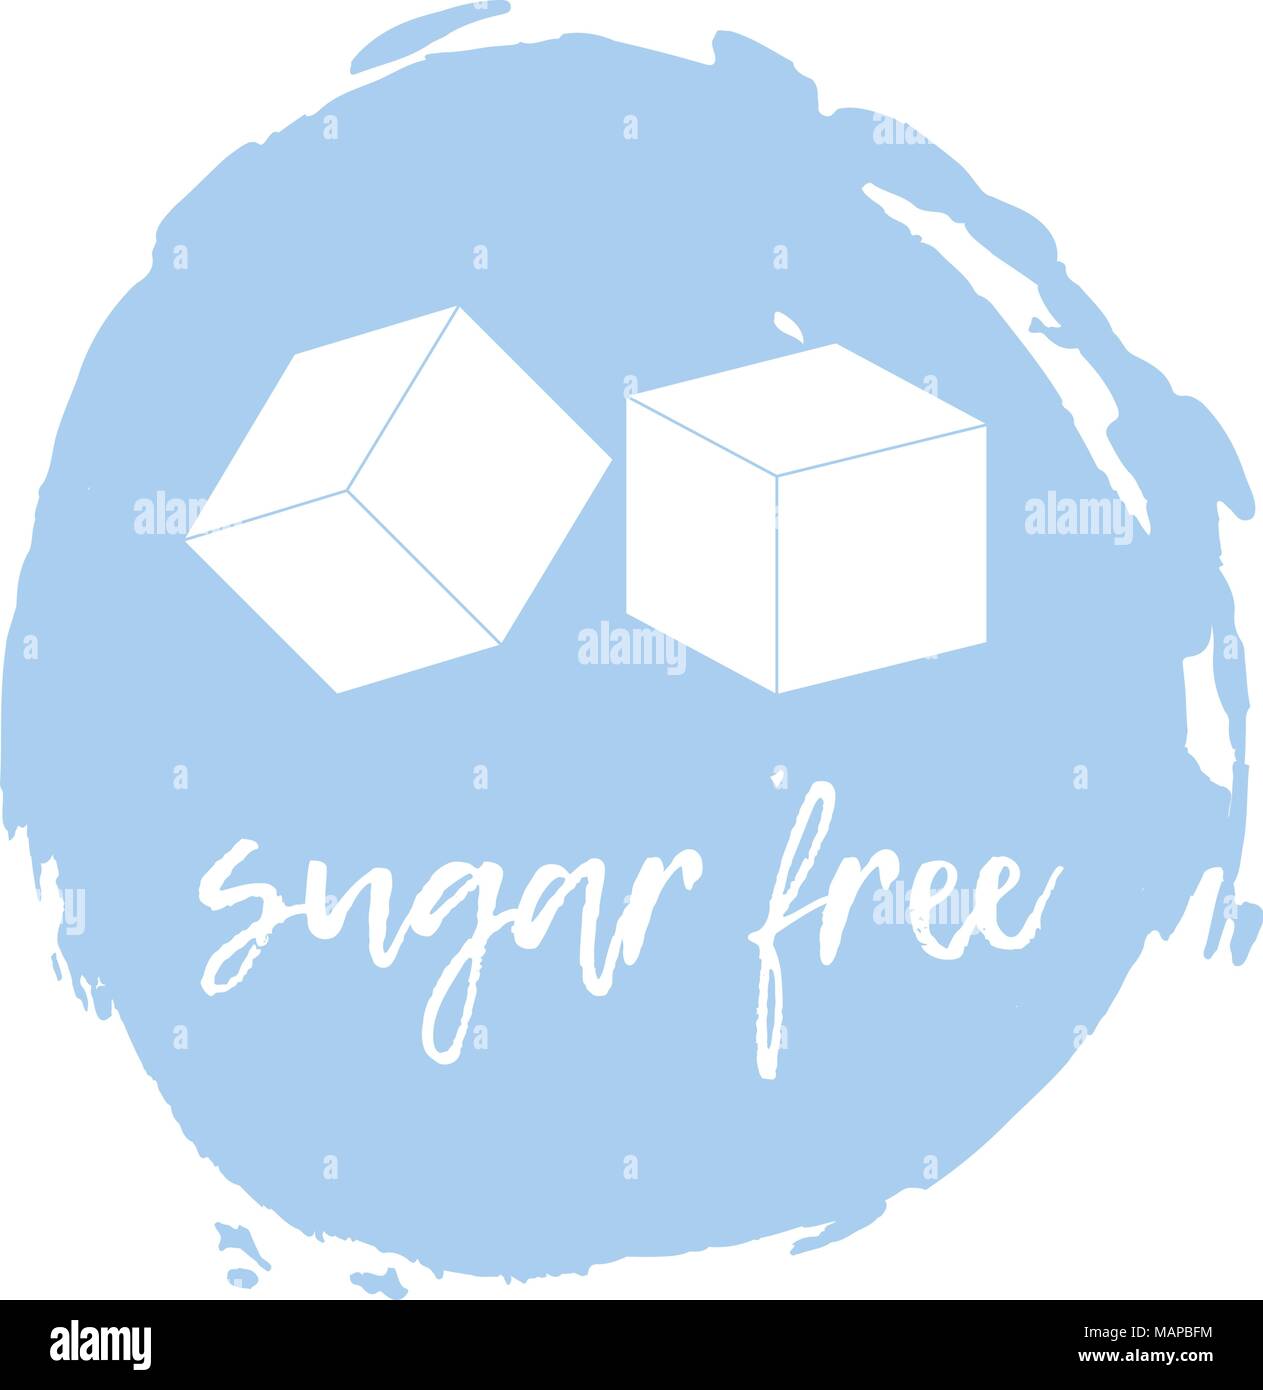 Sugar Free Label. Food intolerance symbols. Vector illustration. Stock Vector